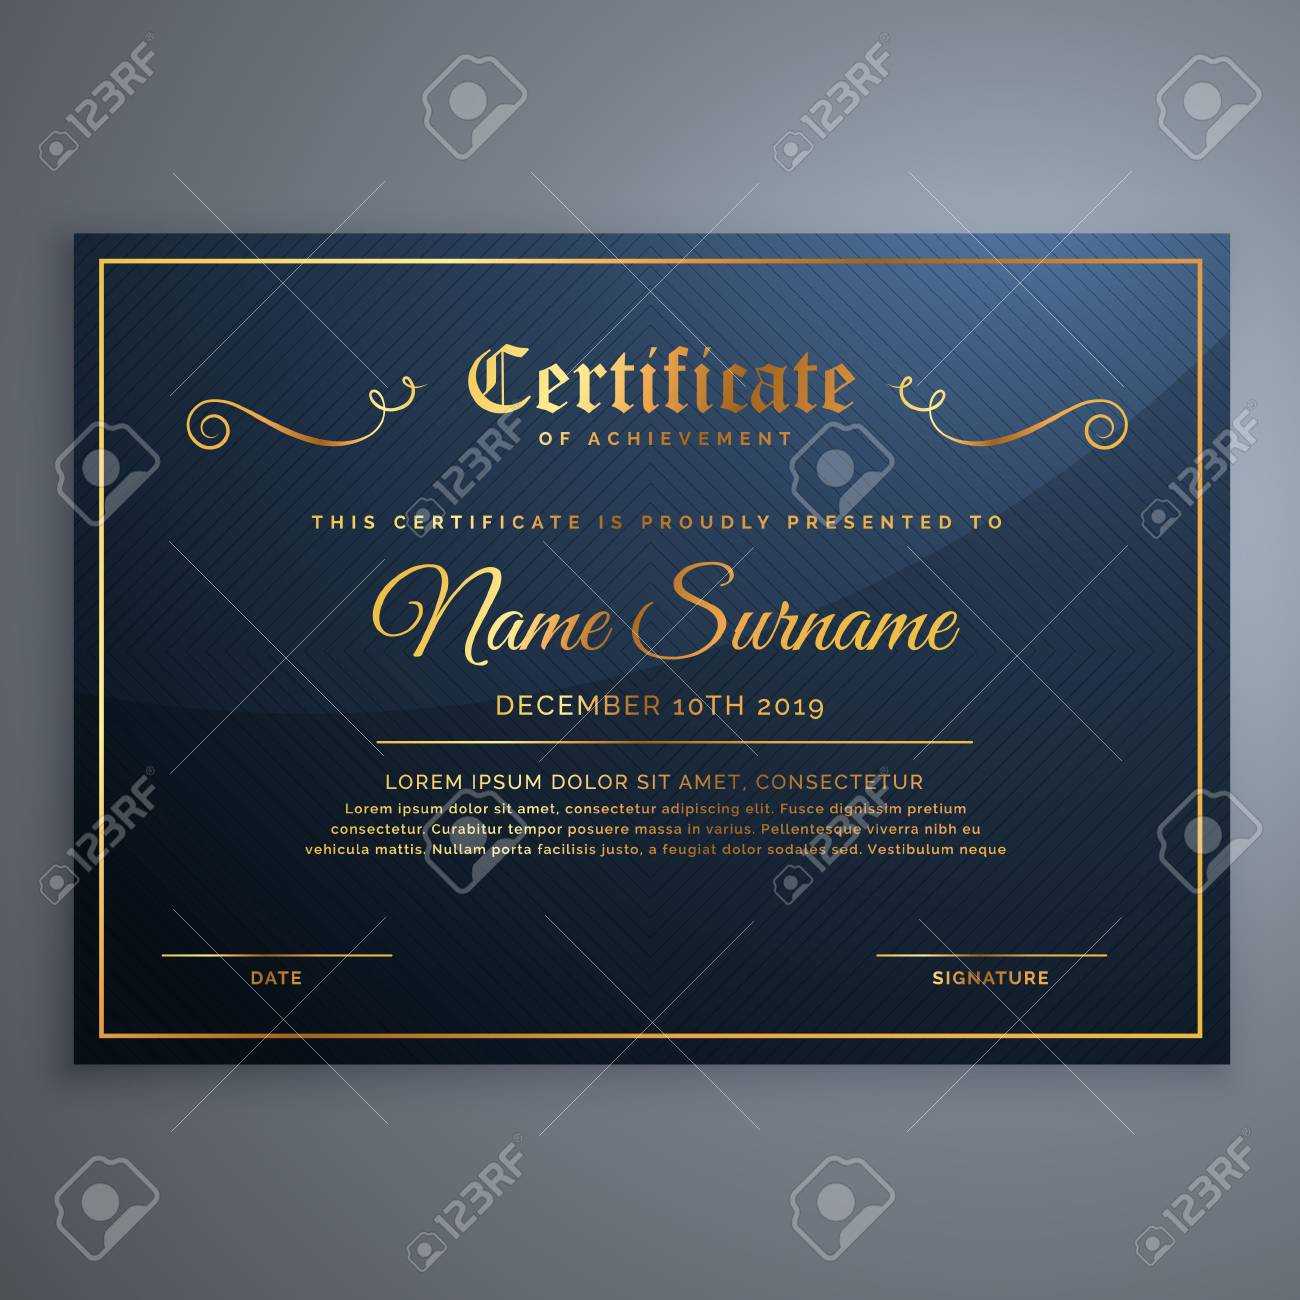 Premium Blue Certificate Template Design In Golden Style In Christian Certificate Template